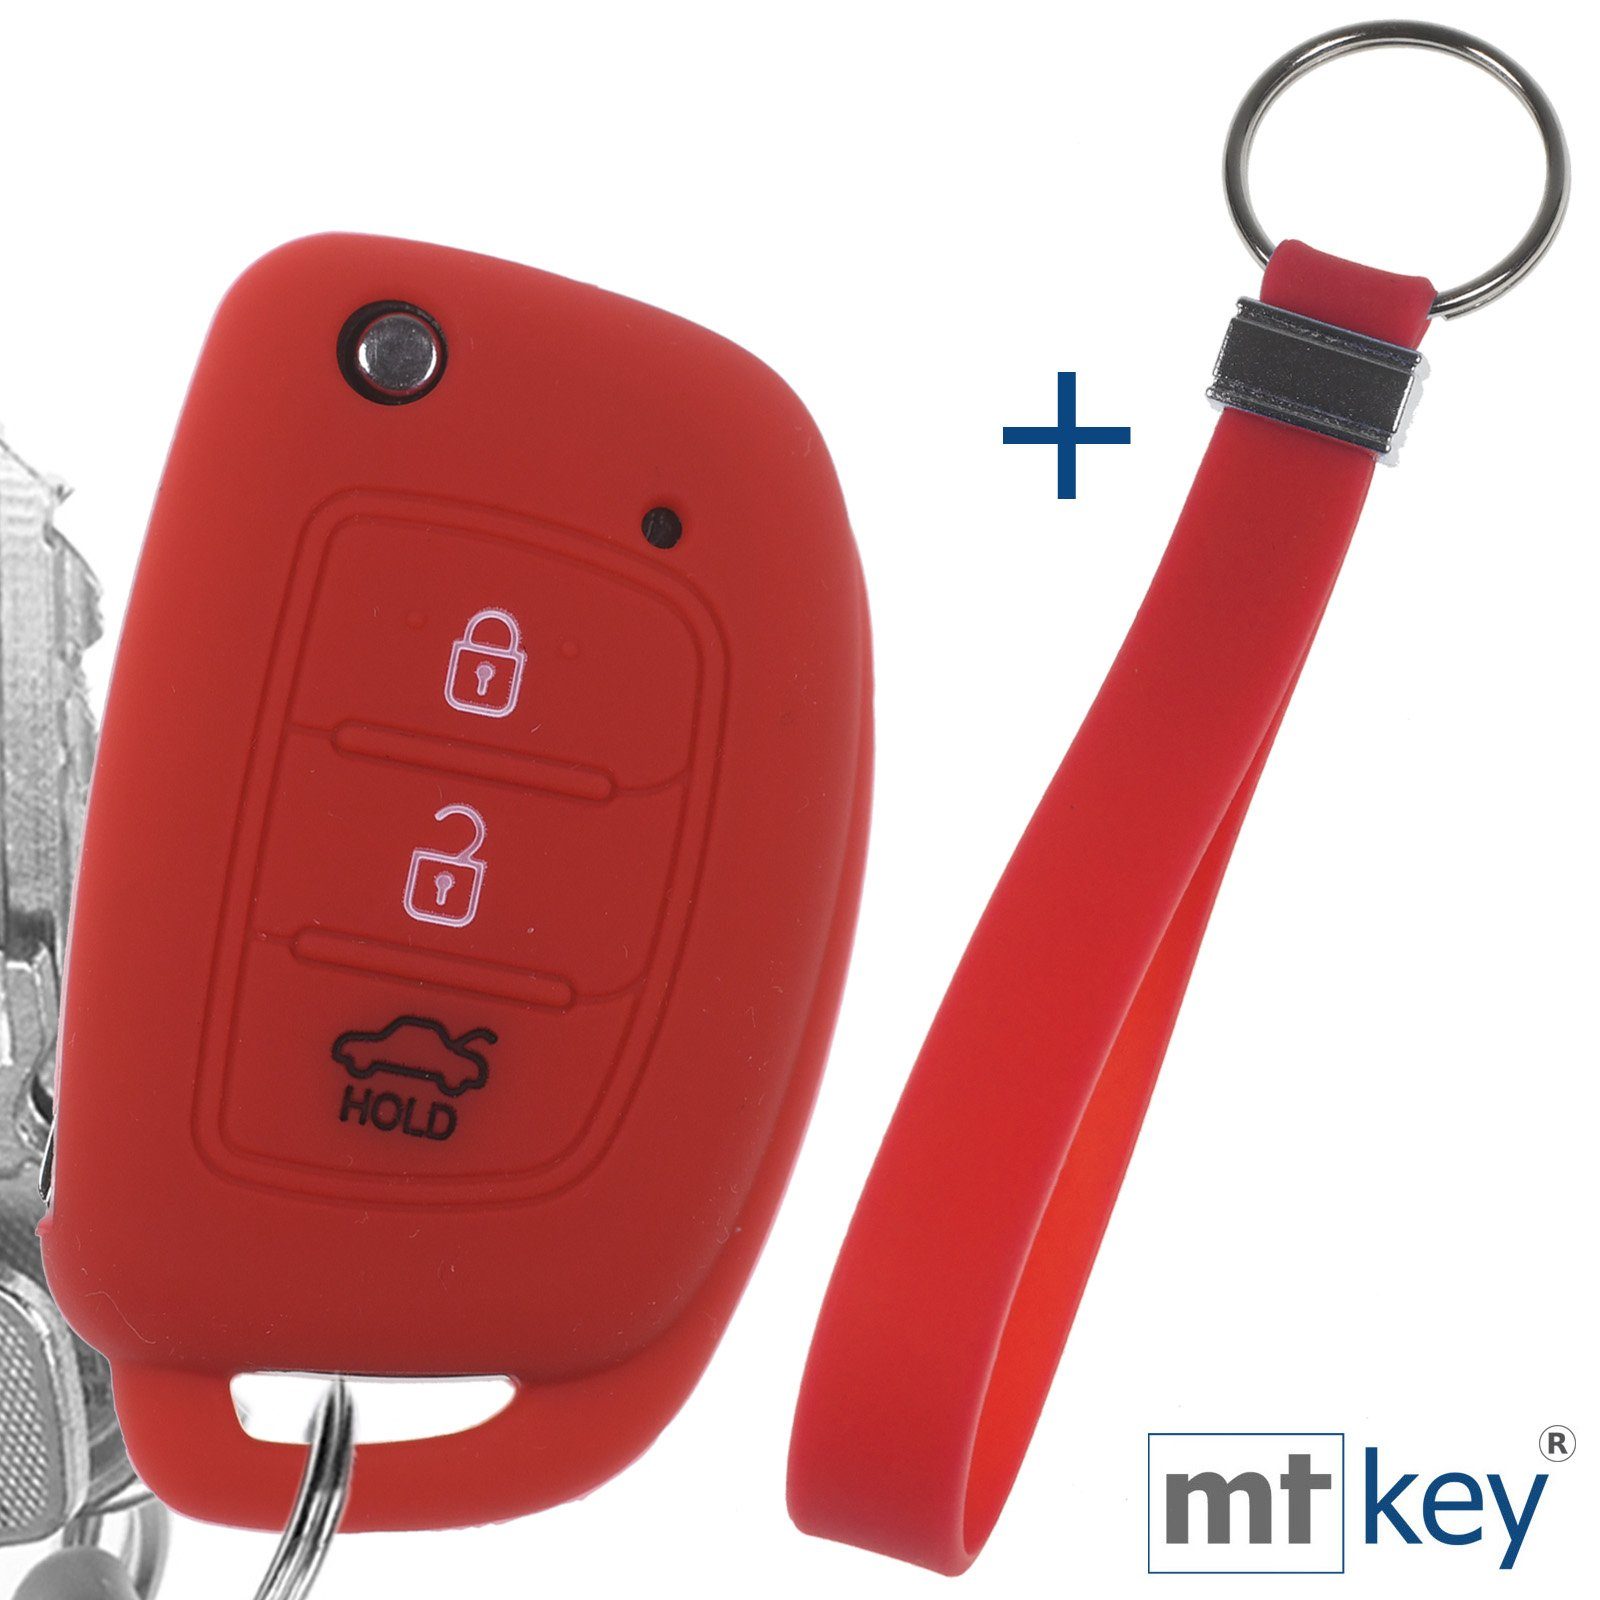 mt-key Schlüsseltasche Autoschlüssel Silikon Schutzhülle im Wabe Design Rot mit Schlüsselband, für Hyundai i10 i20 ix25 ix35 i40 Accent Tucson 3 Knopf Klappschlüssel